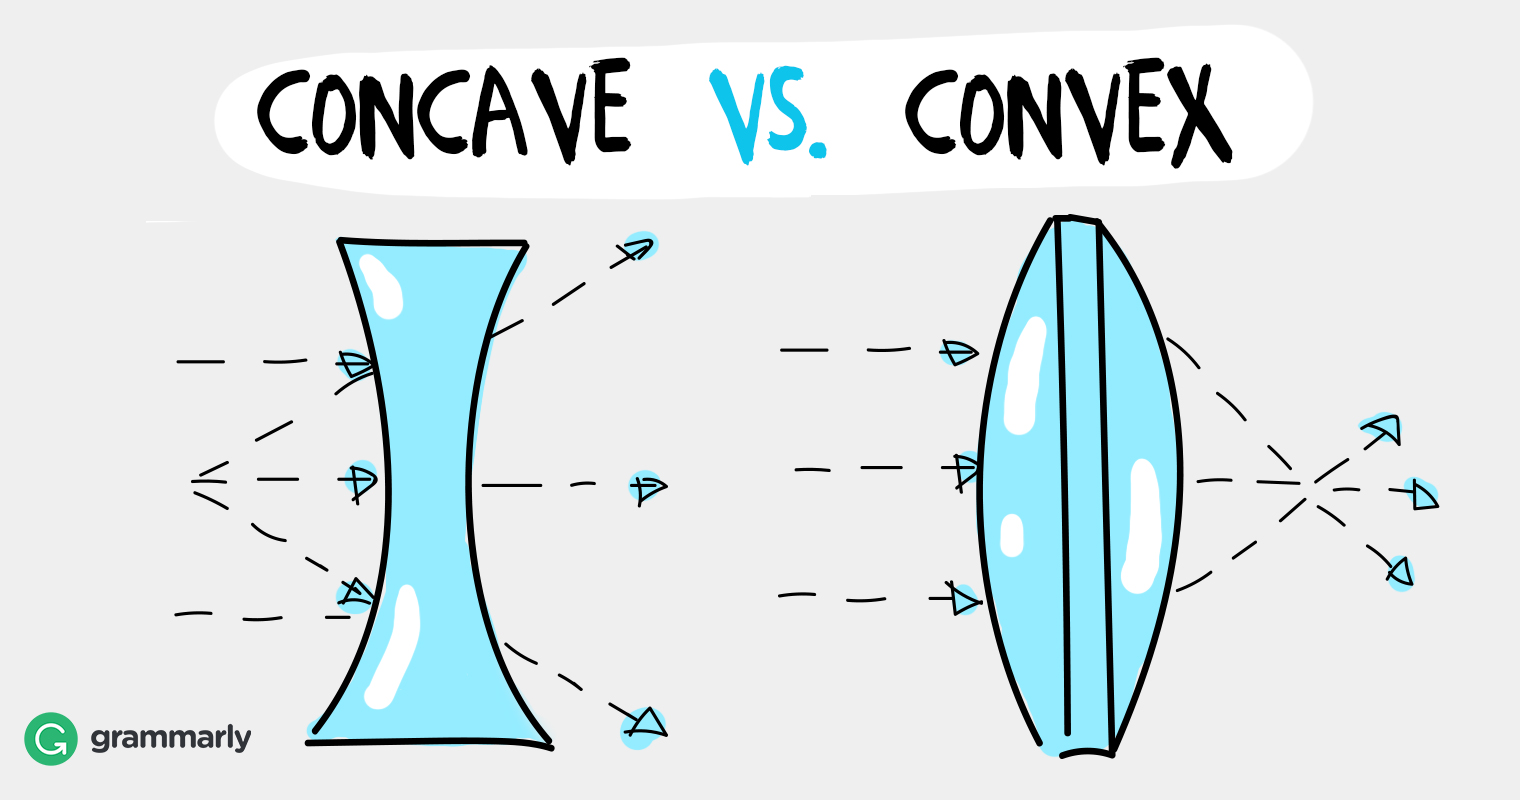 Concave vs. Convex image